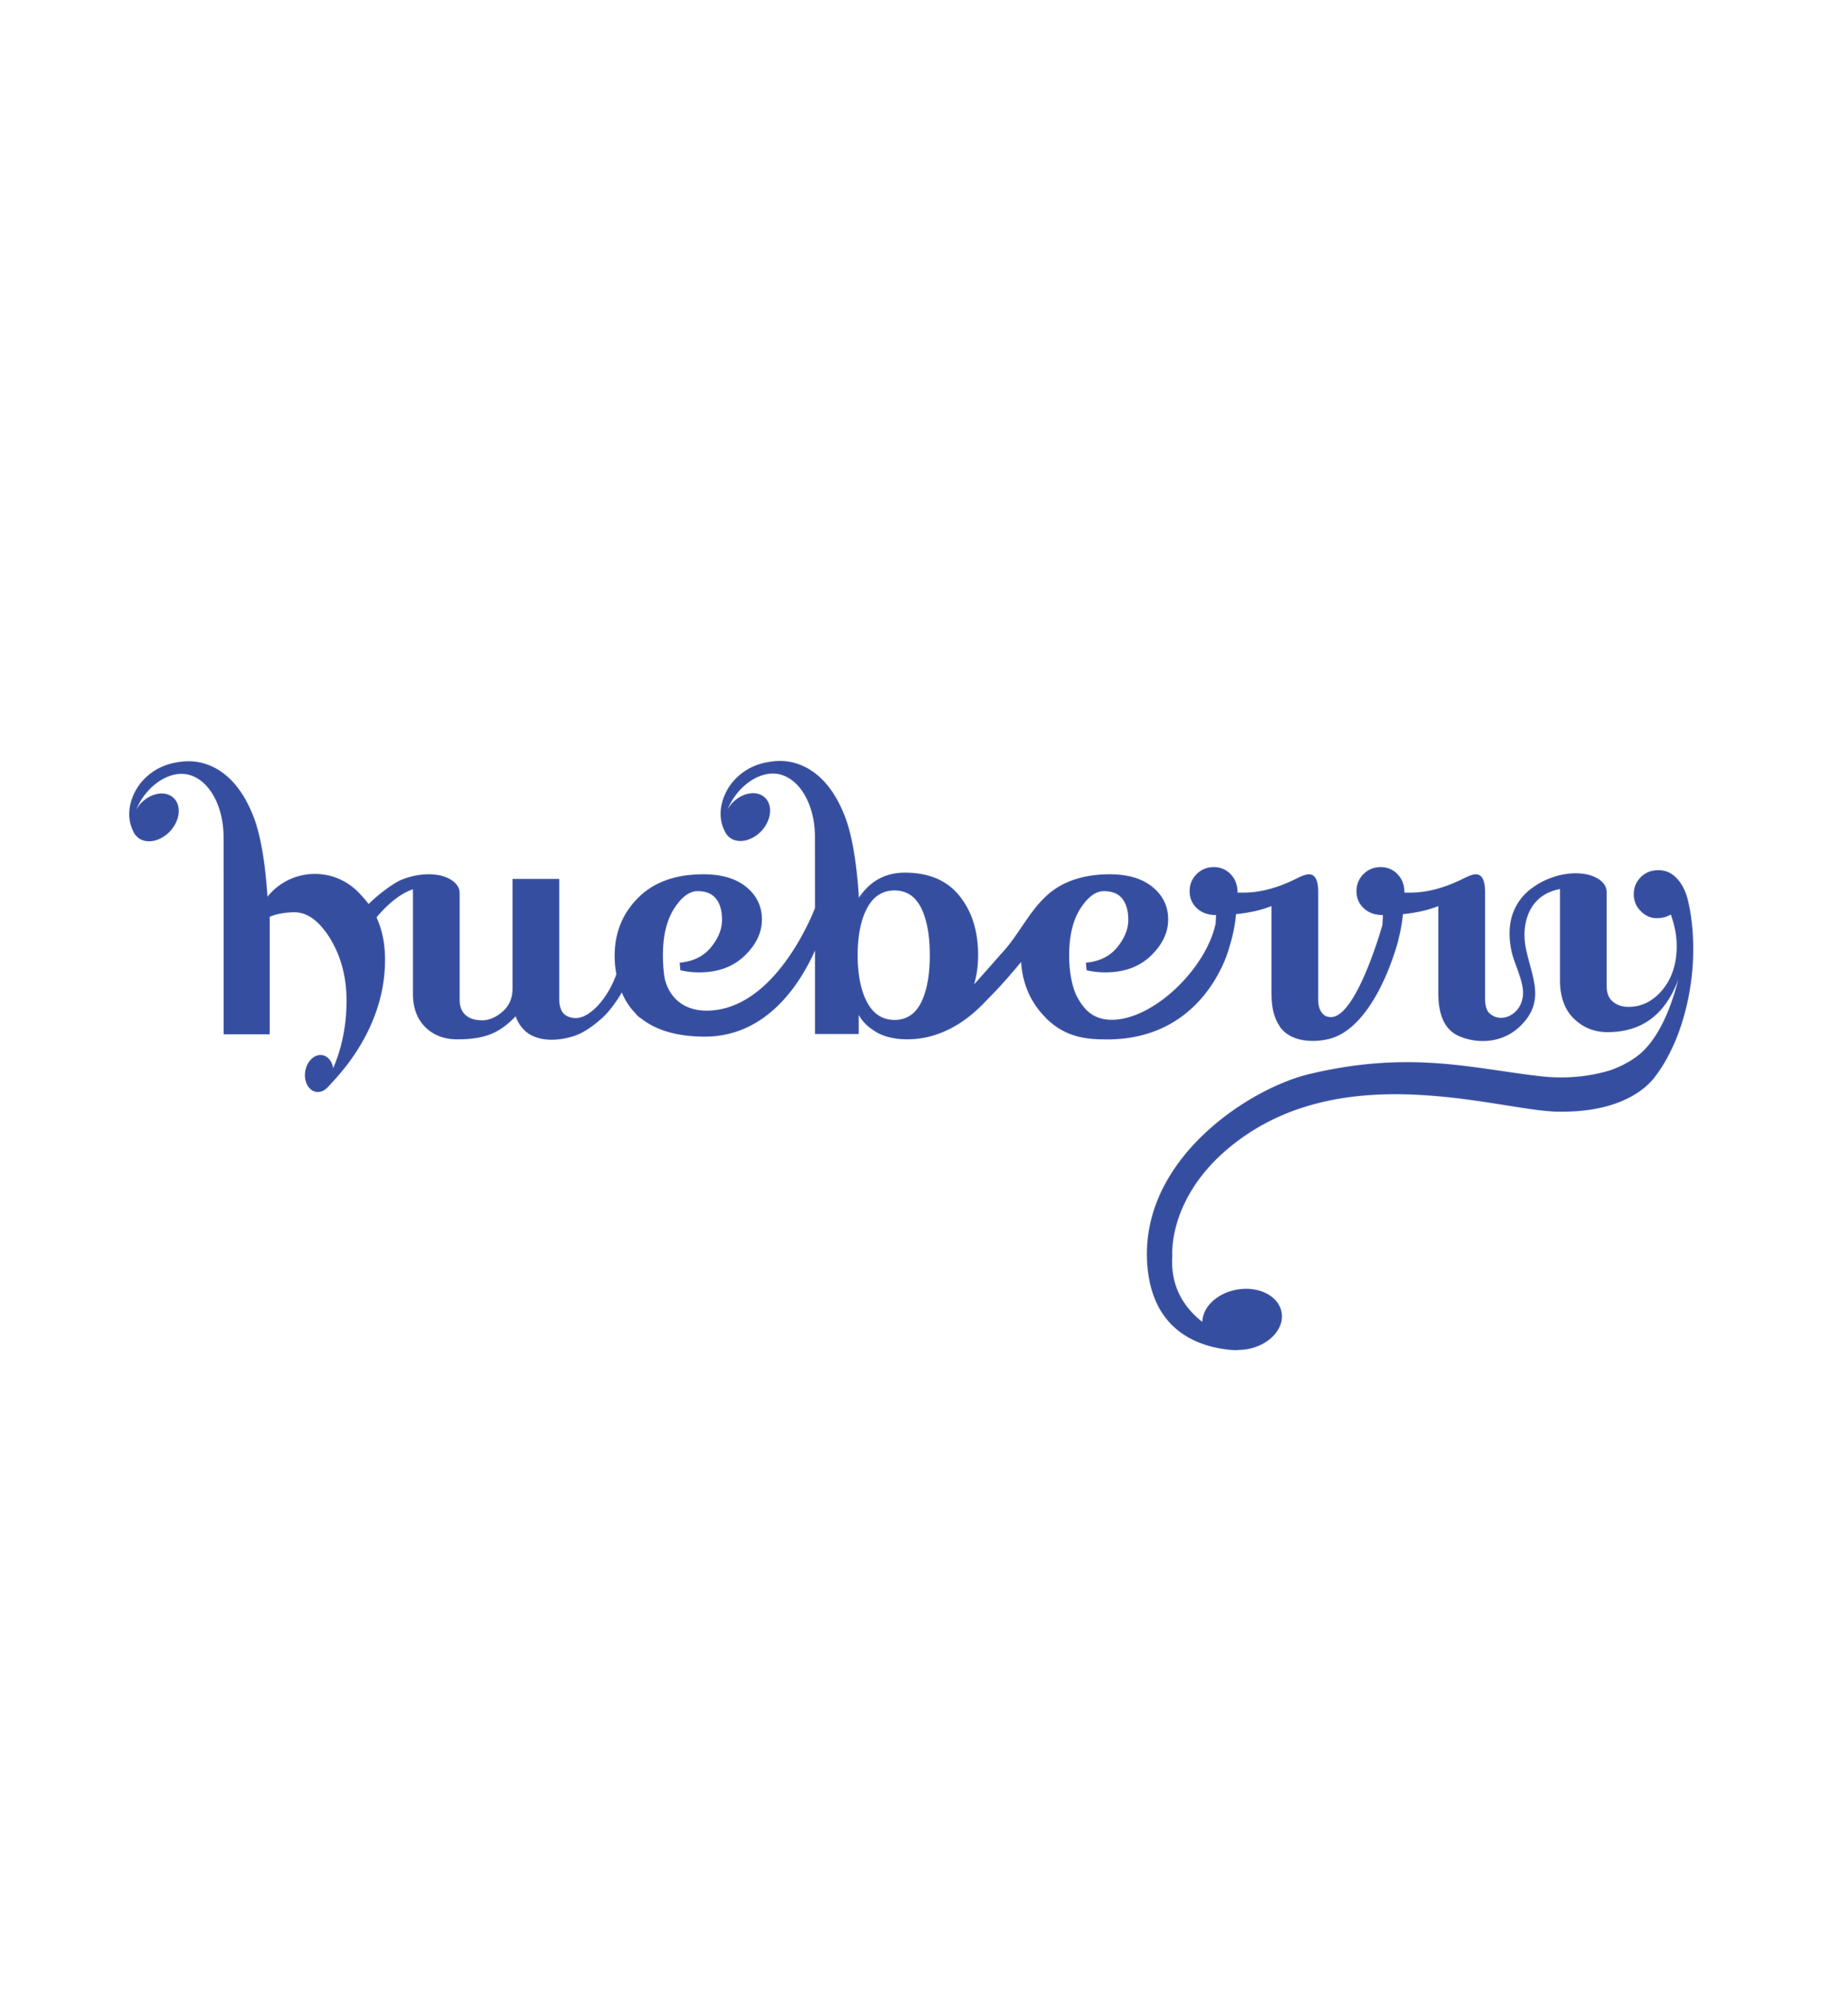 Hueberry Magazine